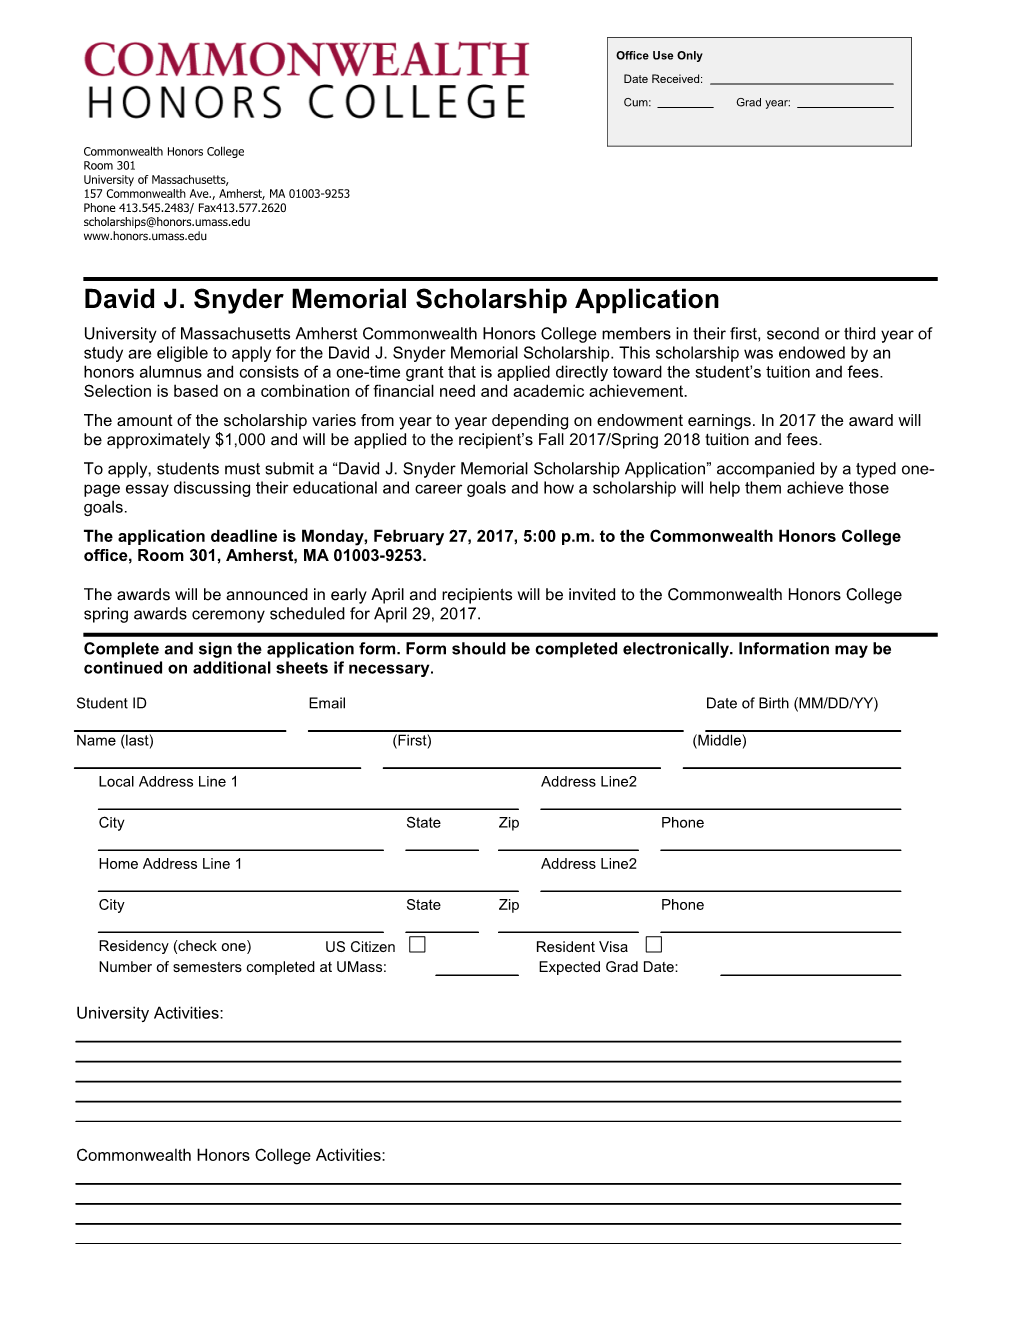 David J. Snyder Memorial Scholarship Application